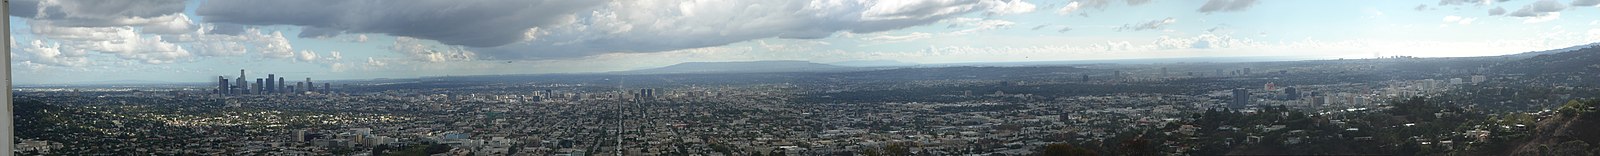 Panorama von Los Angeles